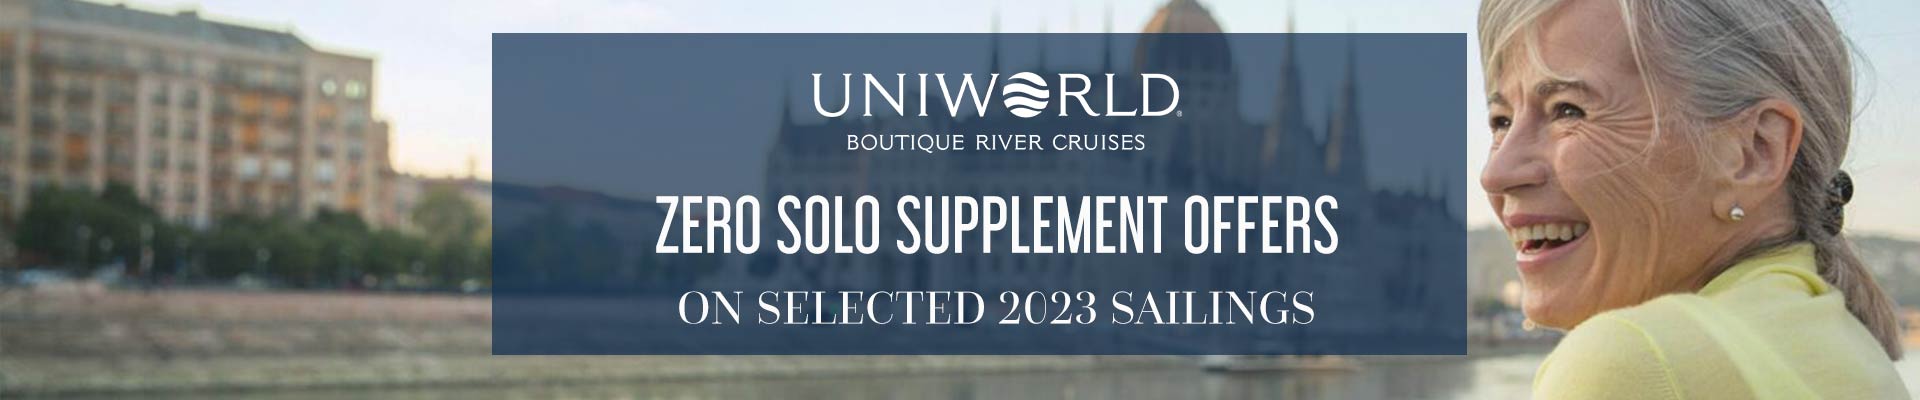 uniworld river cruises single supplement